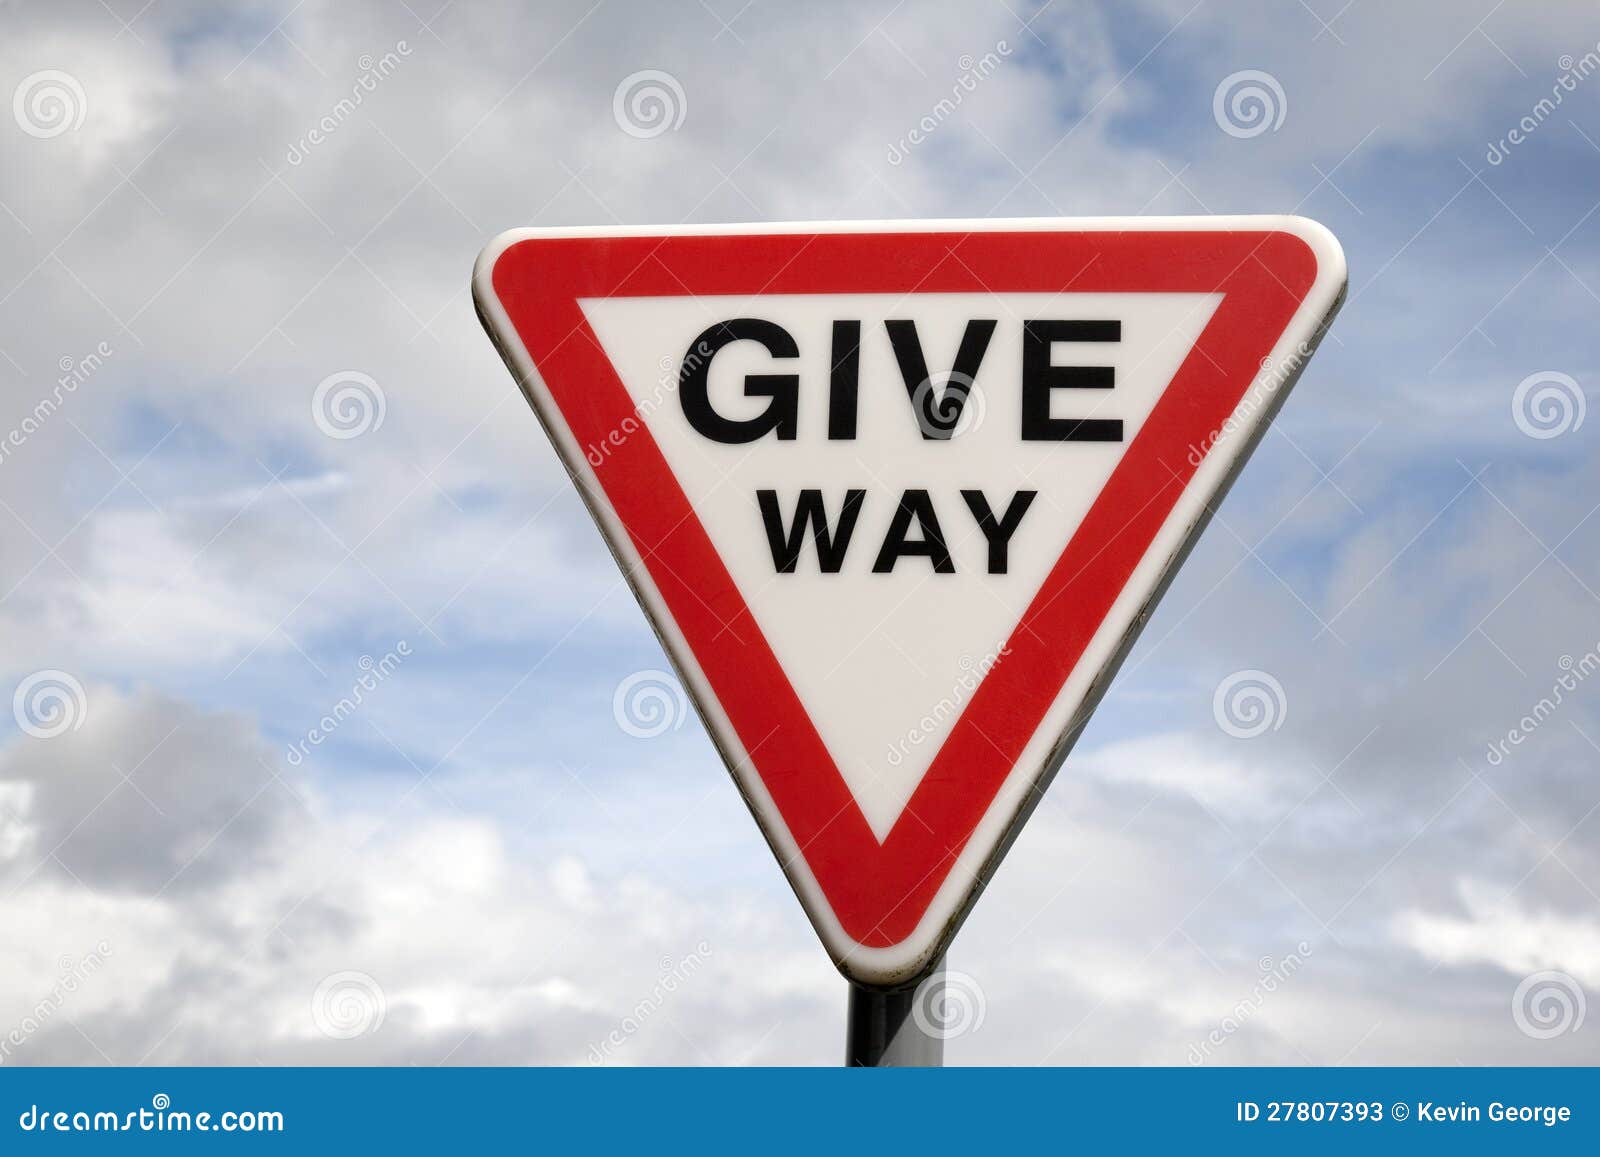 Way sign. Way знаки. Give way sign. Дорожные знаки this way. Дайте знак.